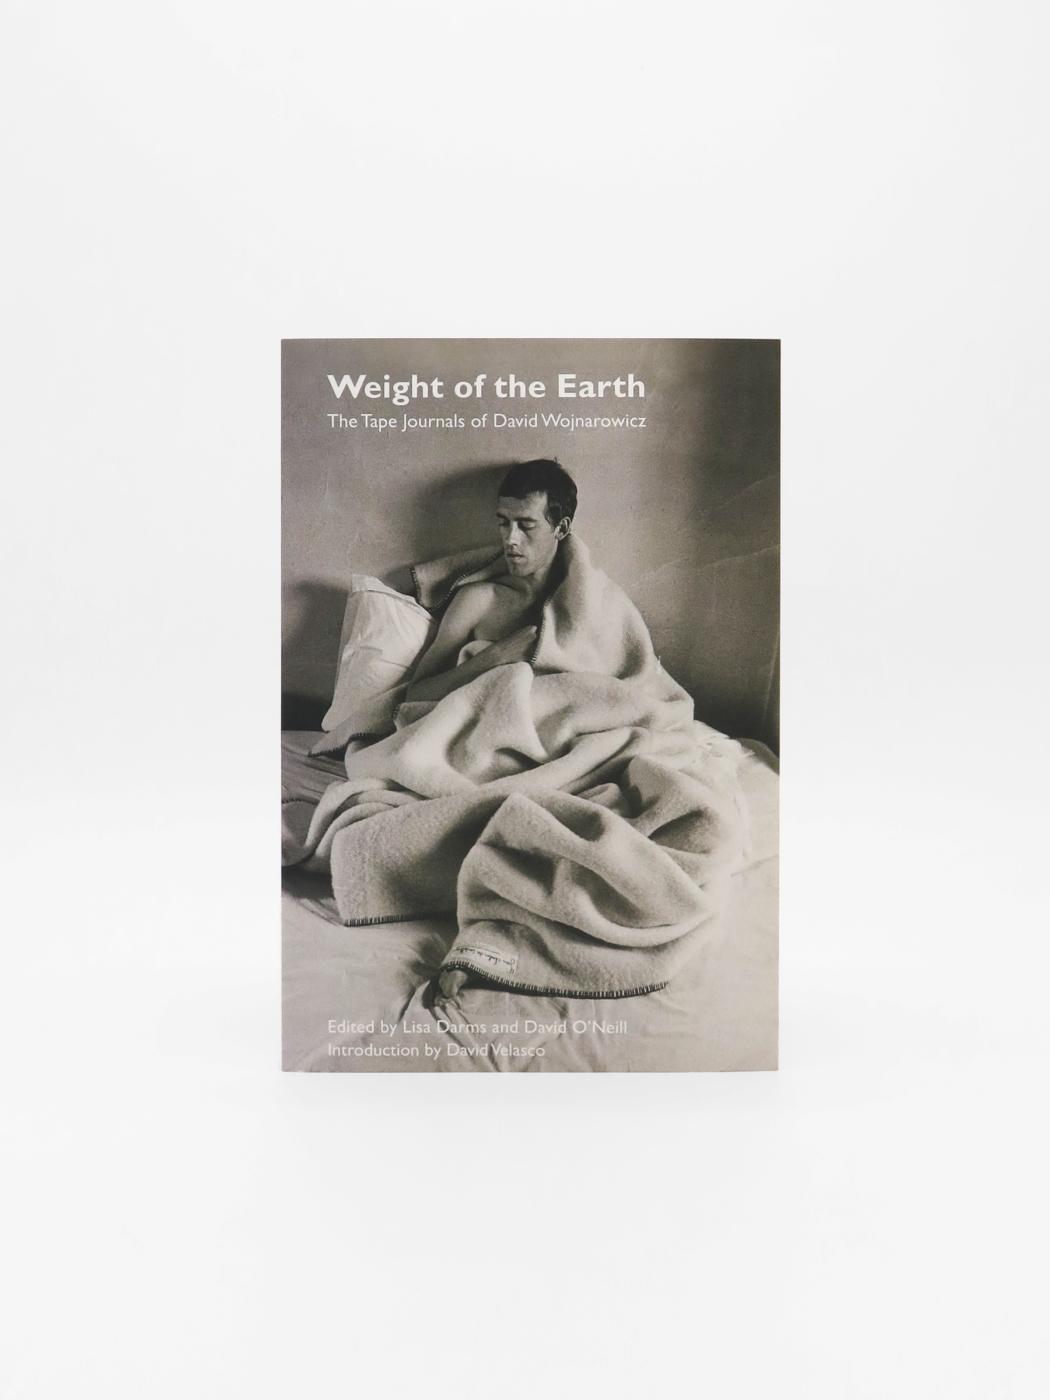 David Wojnarowicz, Weight of the Earth